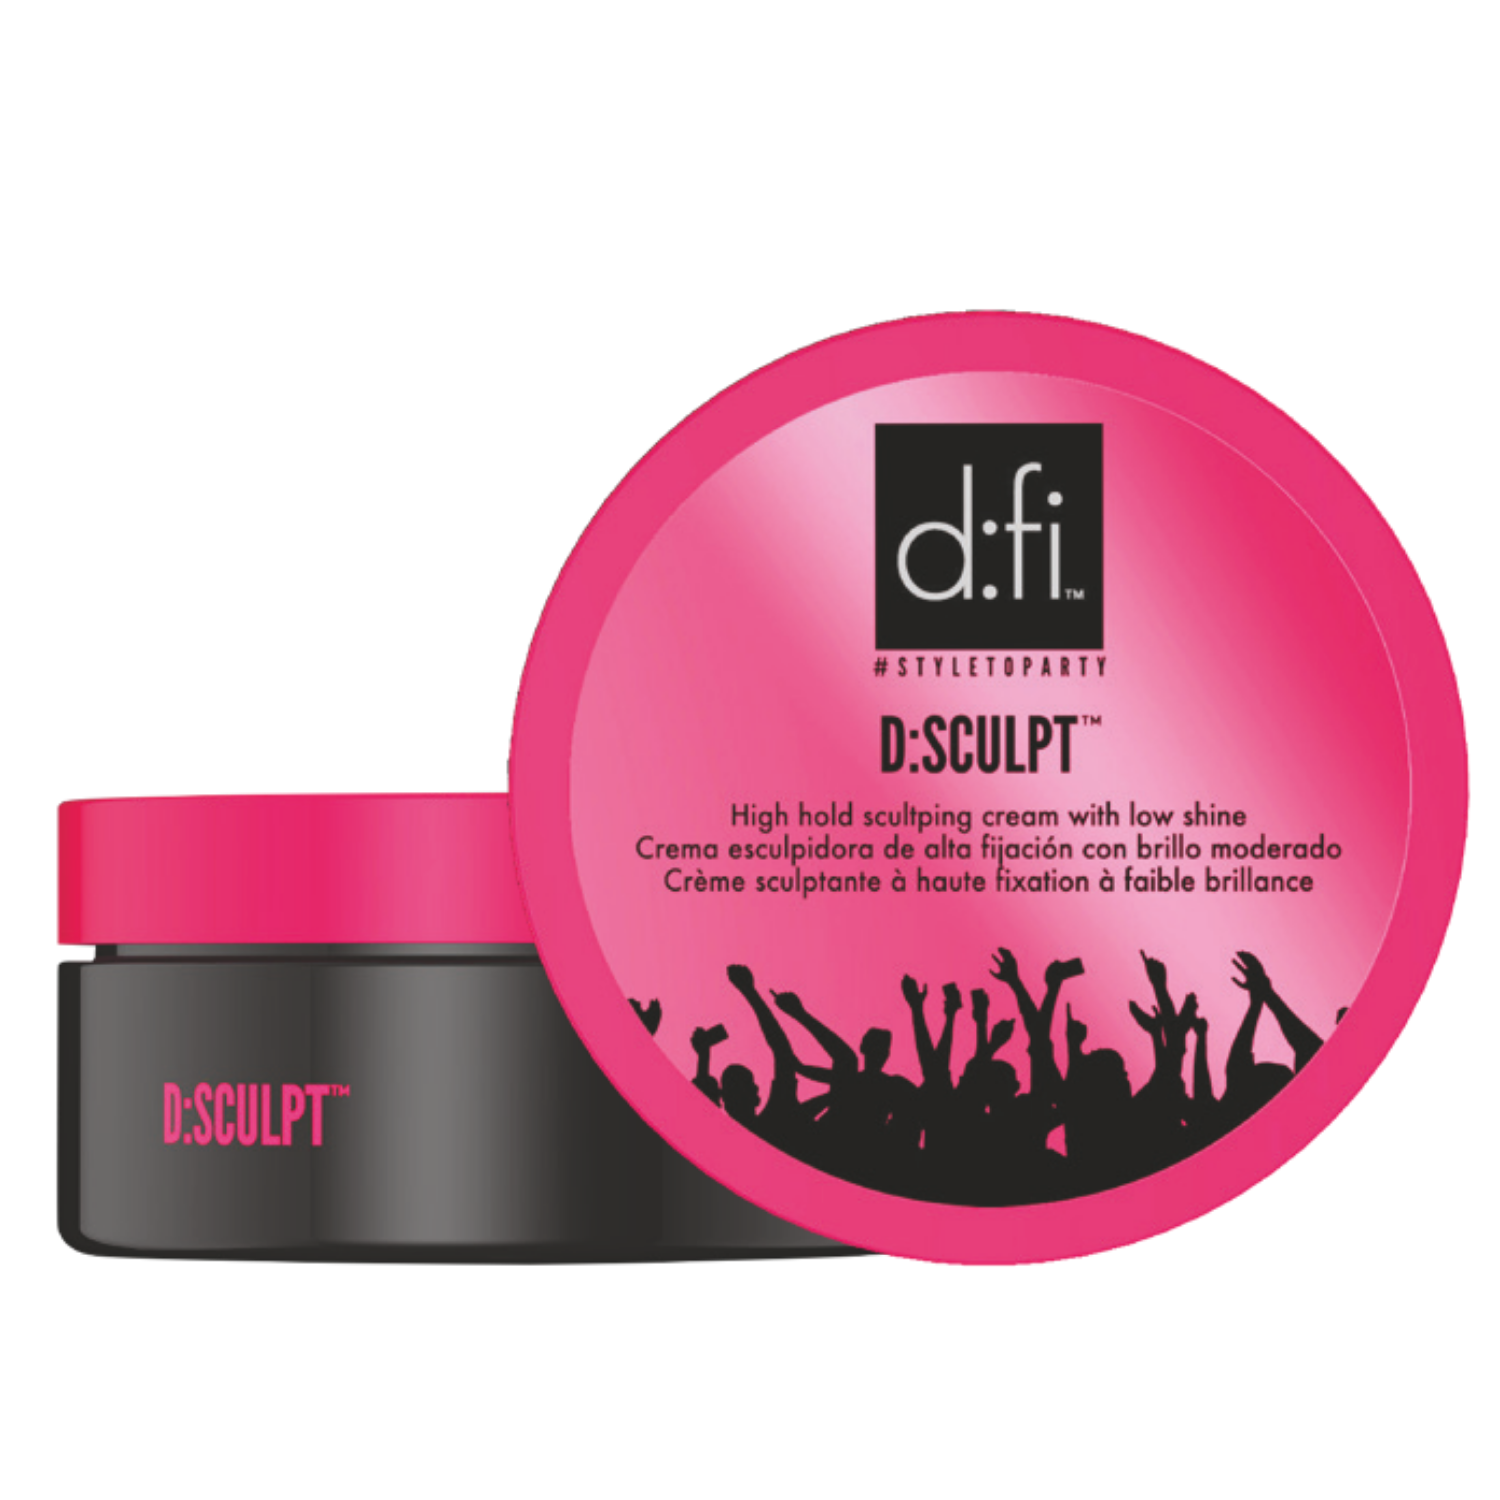 d:fi D:SCULPT High Hold Hair Sculpting Cream 2.65 oz.